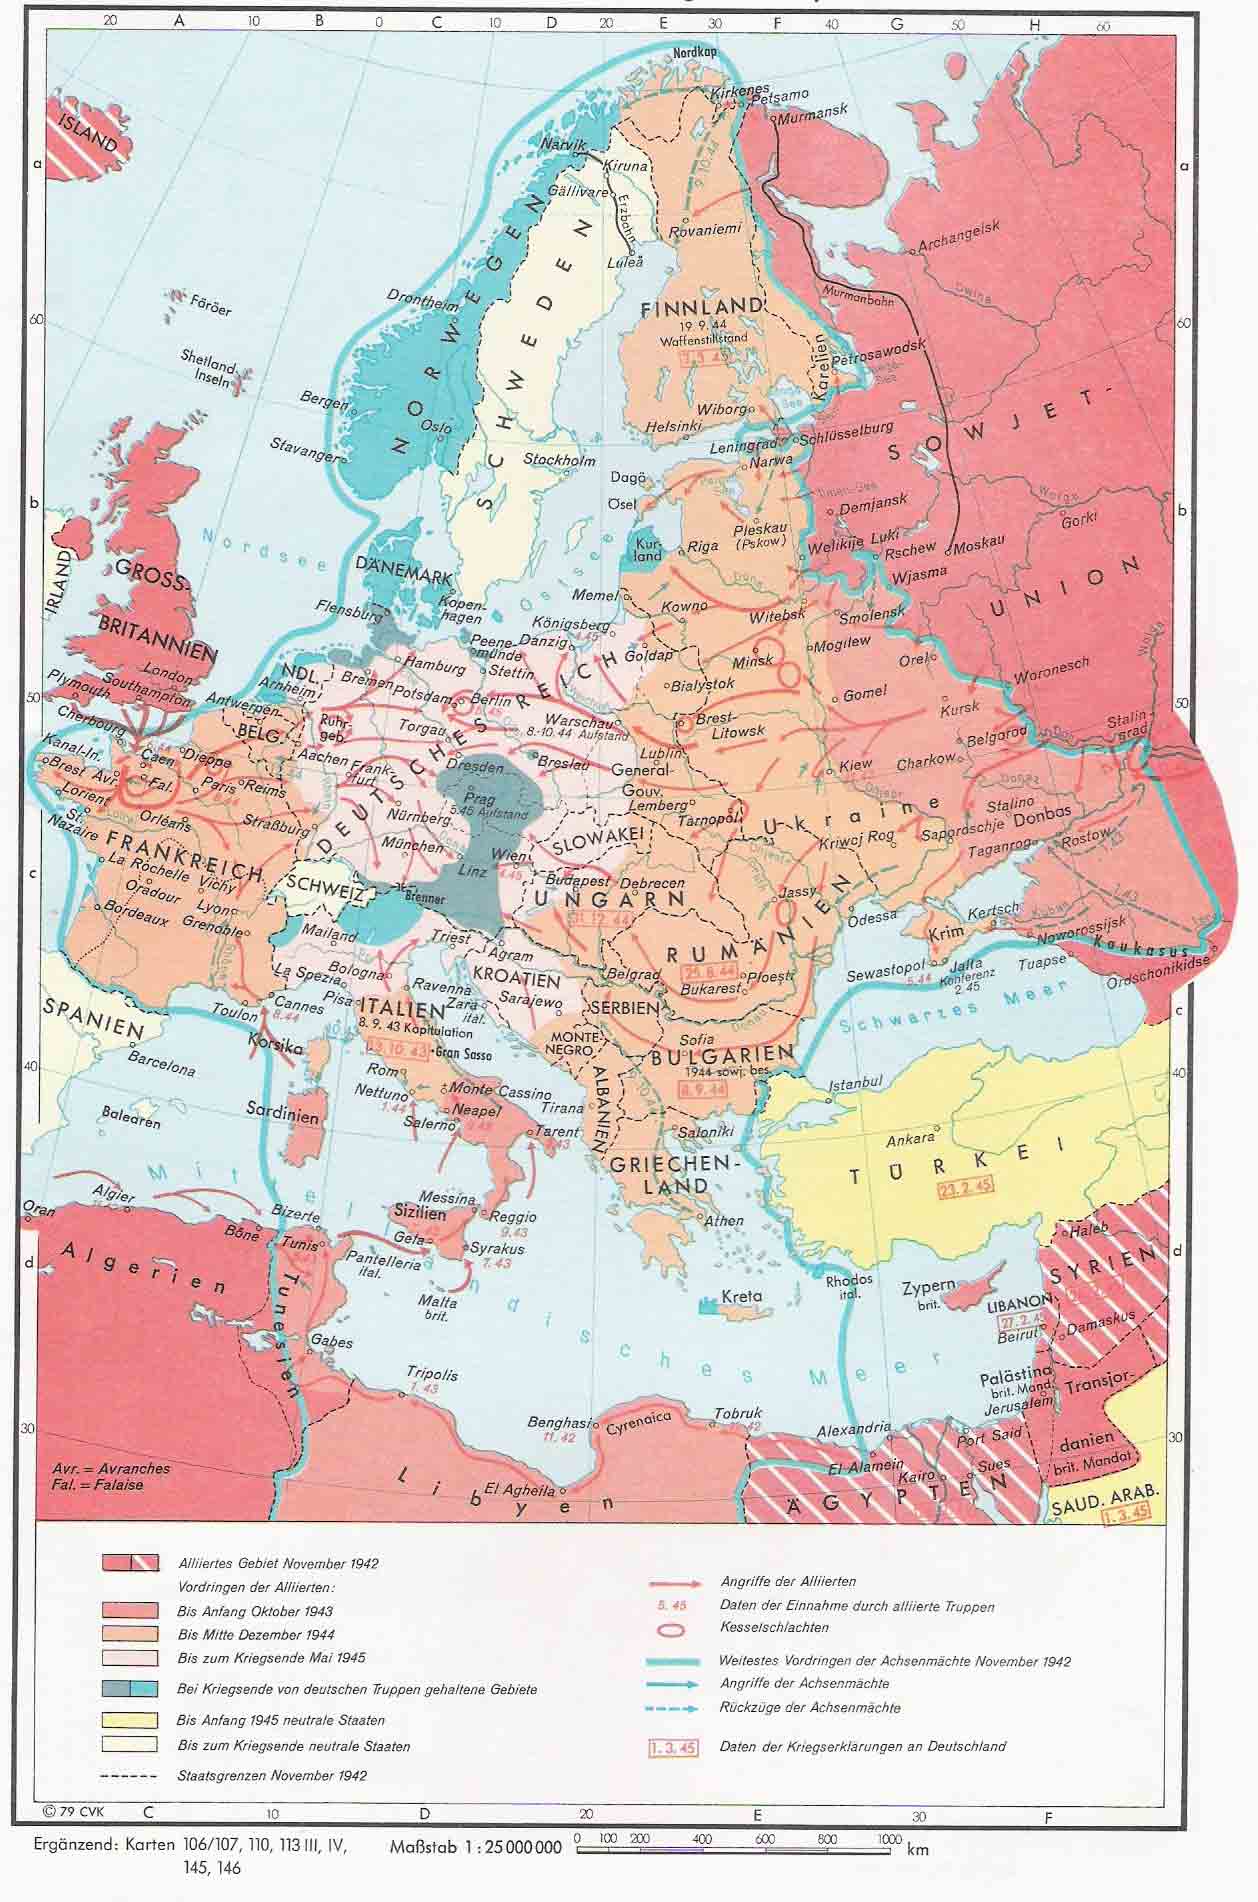 La Segunda Guerra Mundial en Europa 1942-1945